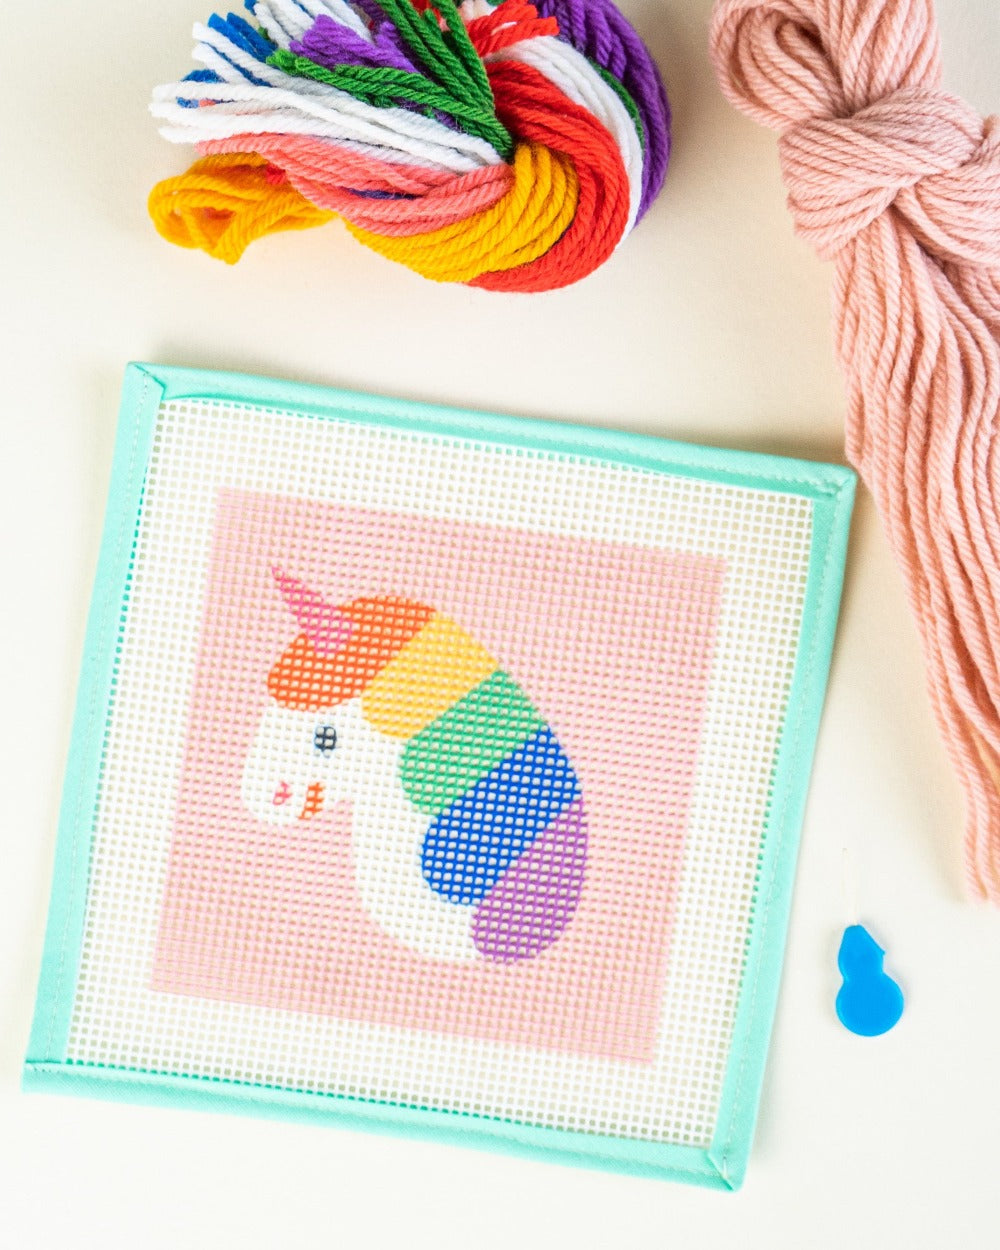 Rainbow Unicorn needlepoint craft kit for kids by Unwind Studio